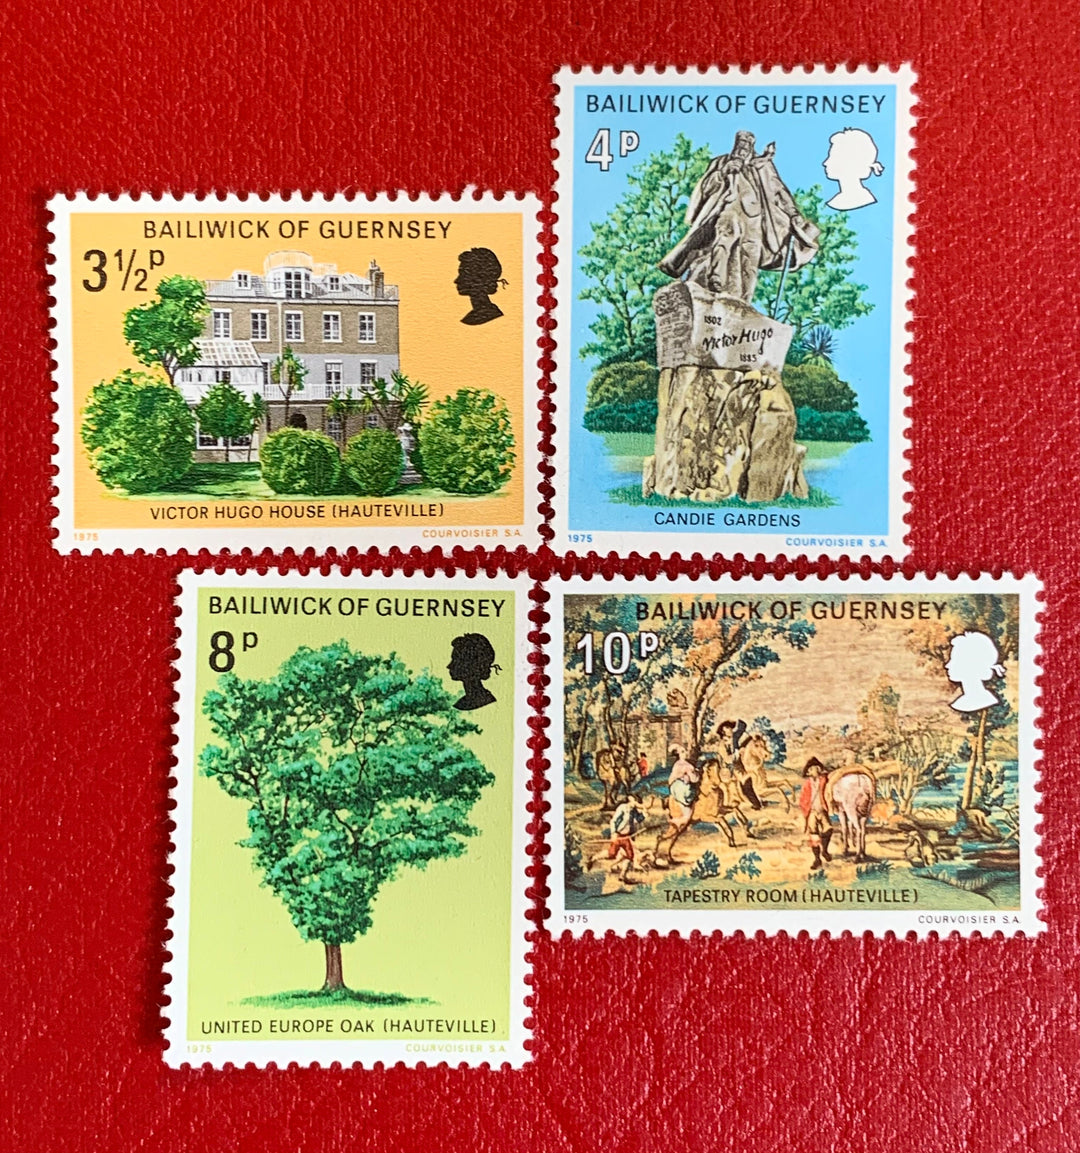 Guernsey - Original Vintage Postage Stamps - 1975 Victor Hugo’s Exile -for the collector, artist or crafter- decoupage, scrapbooks, journals